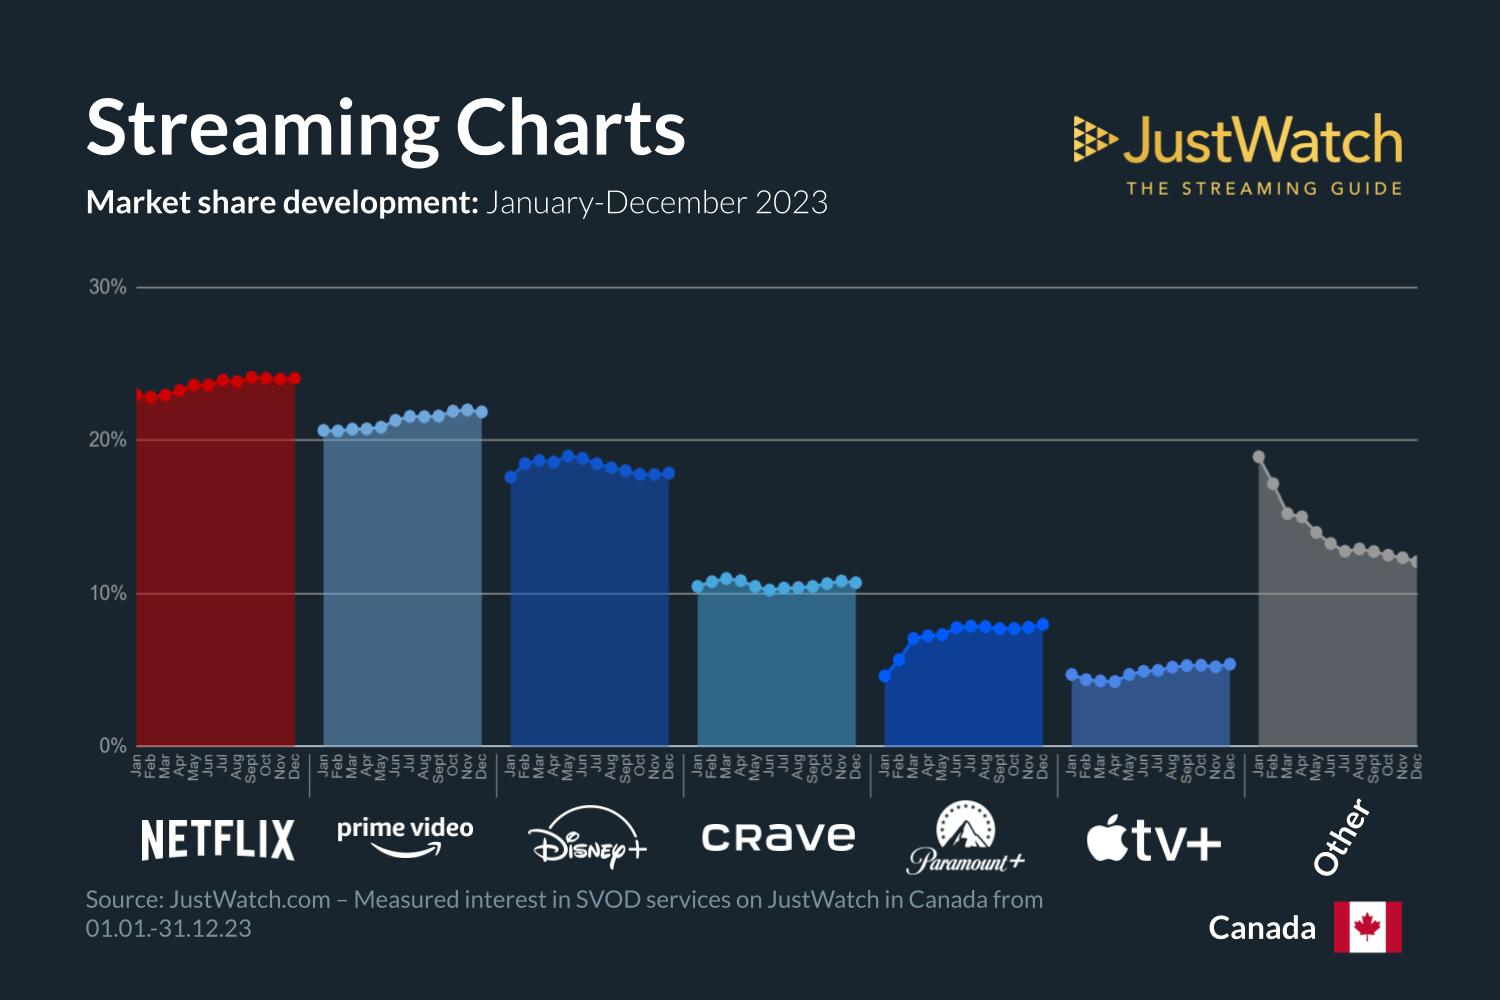 Market share of streaming services: Netflix, Prime Video, Disney+, Prime Video, Crave